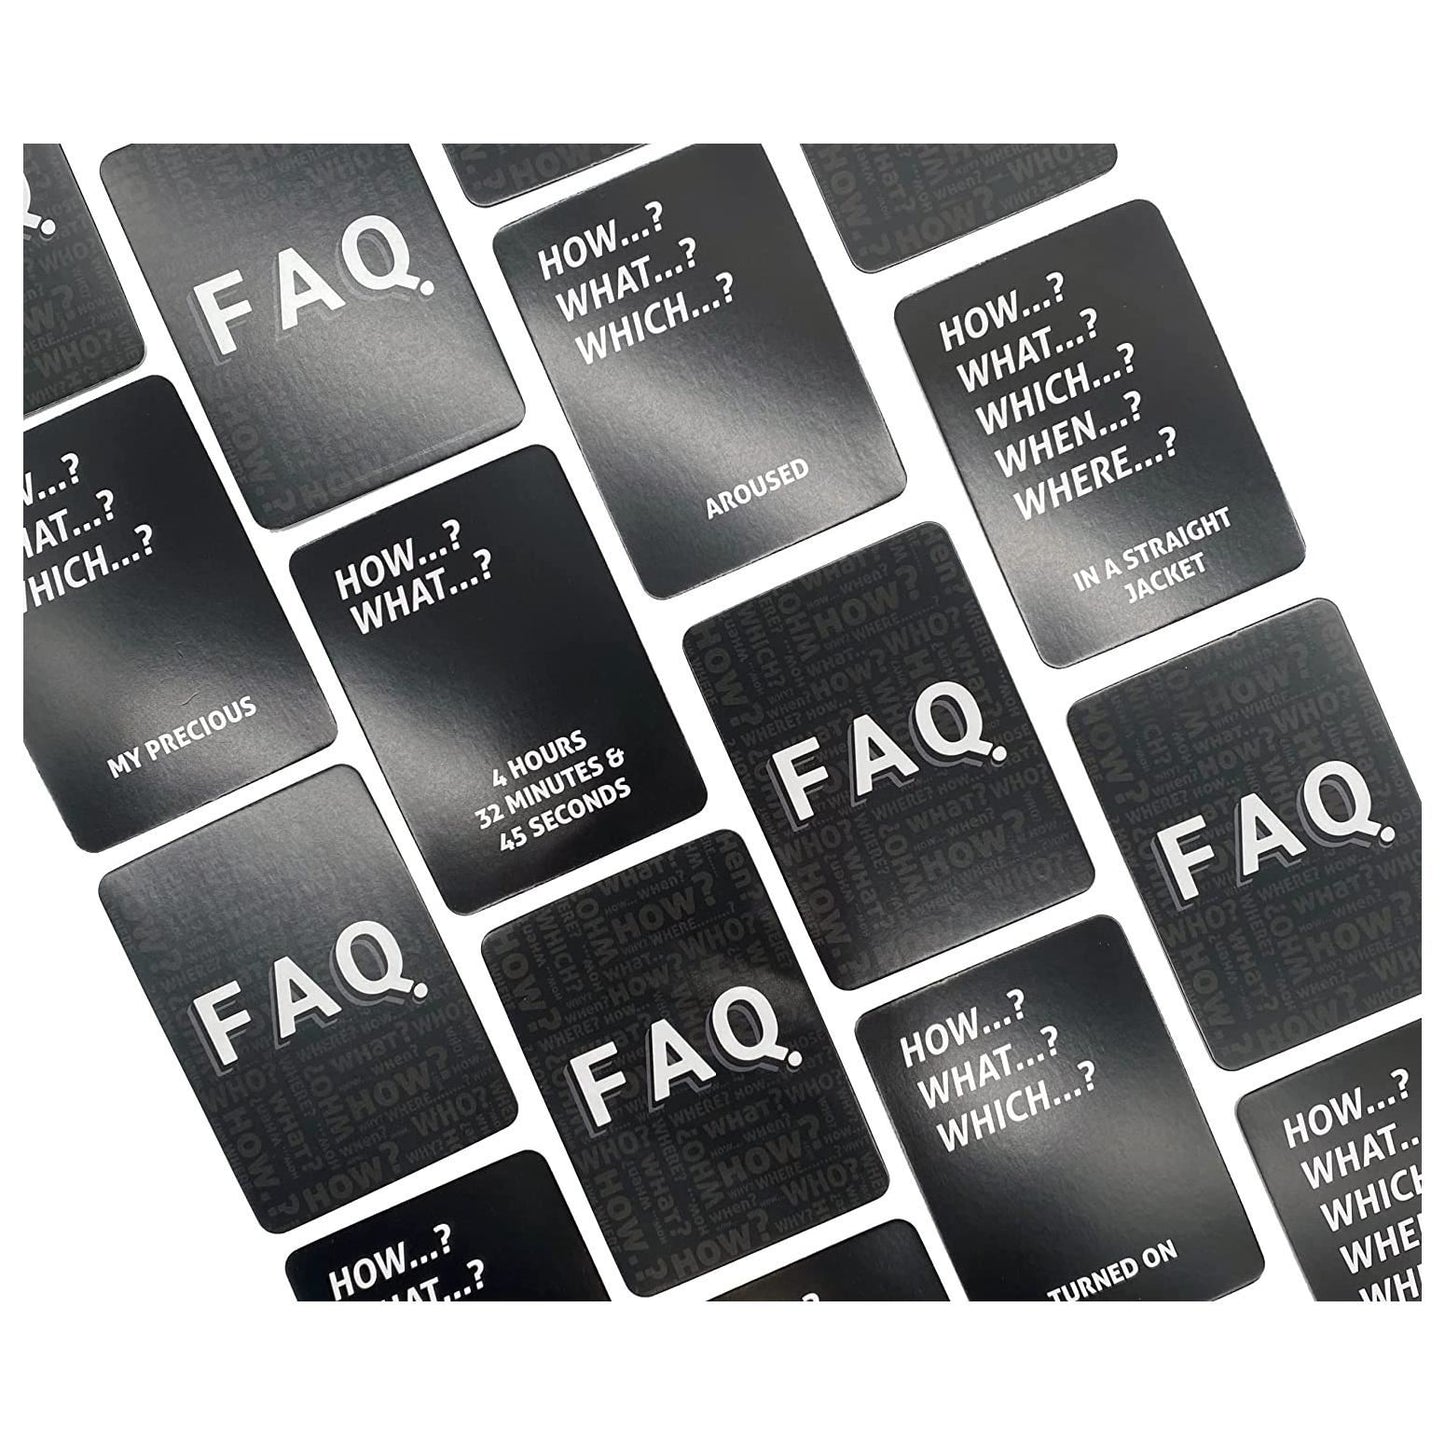 F.A.Q. Question Card Game